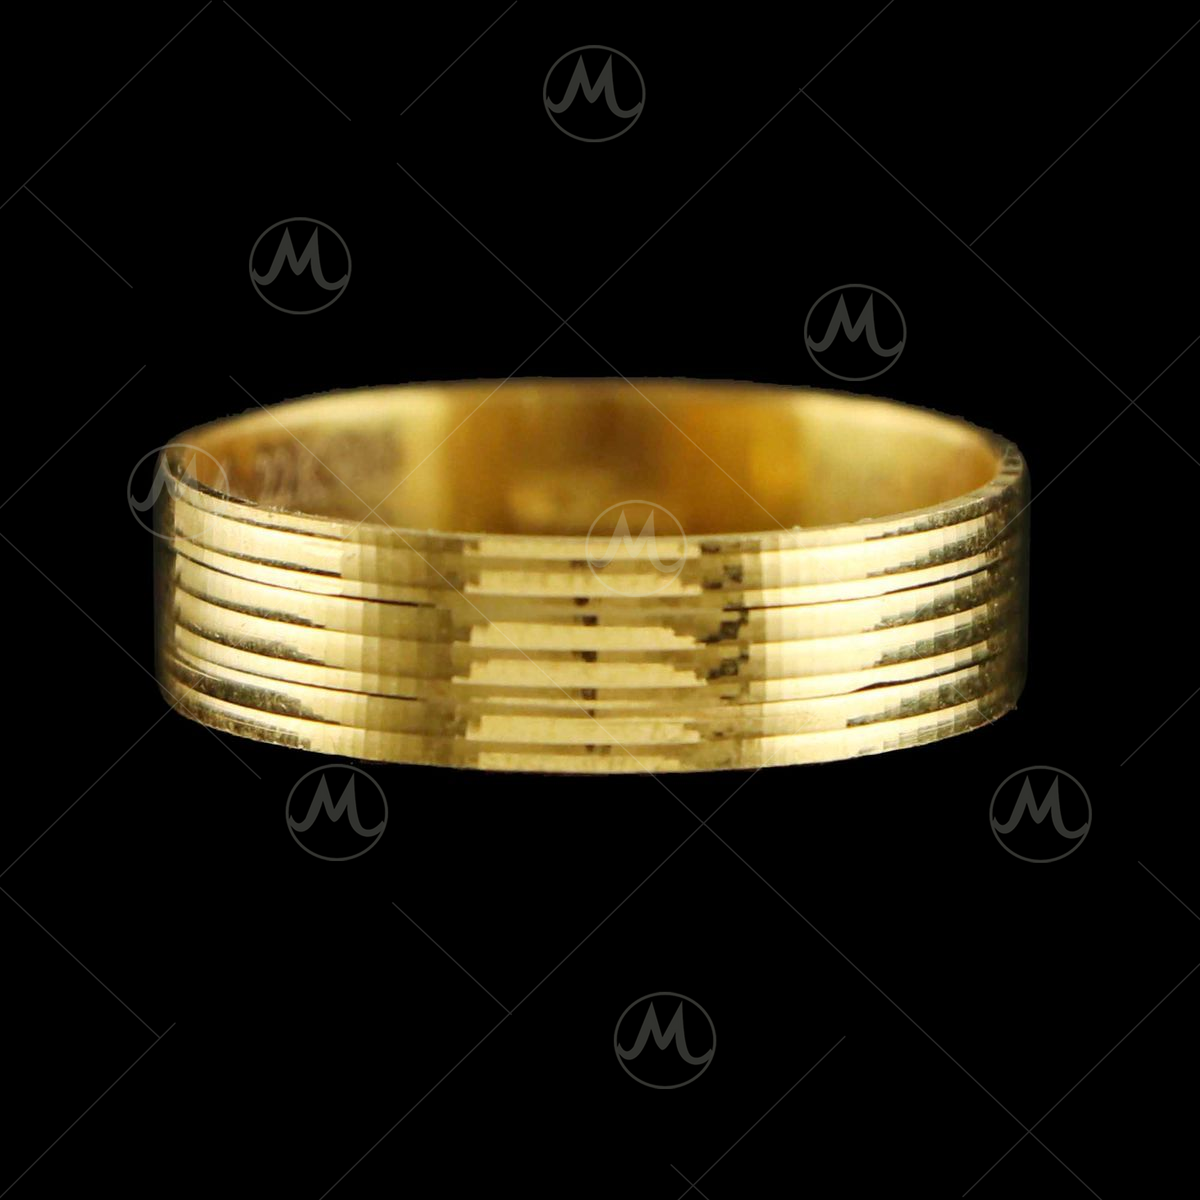 22K Gold Engagement, Wedding, Anniversary Gold Jewelry Man Women Couple Ring  1 | eBay